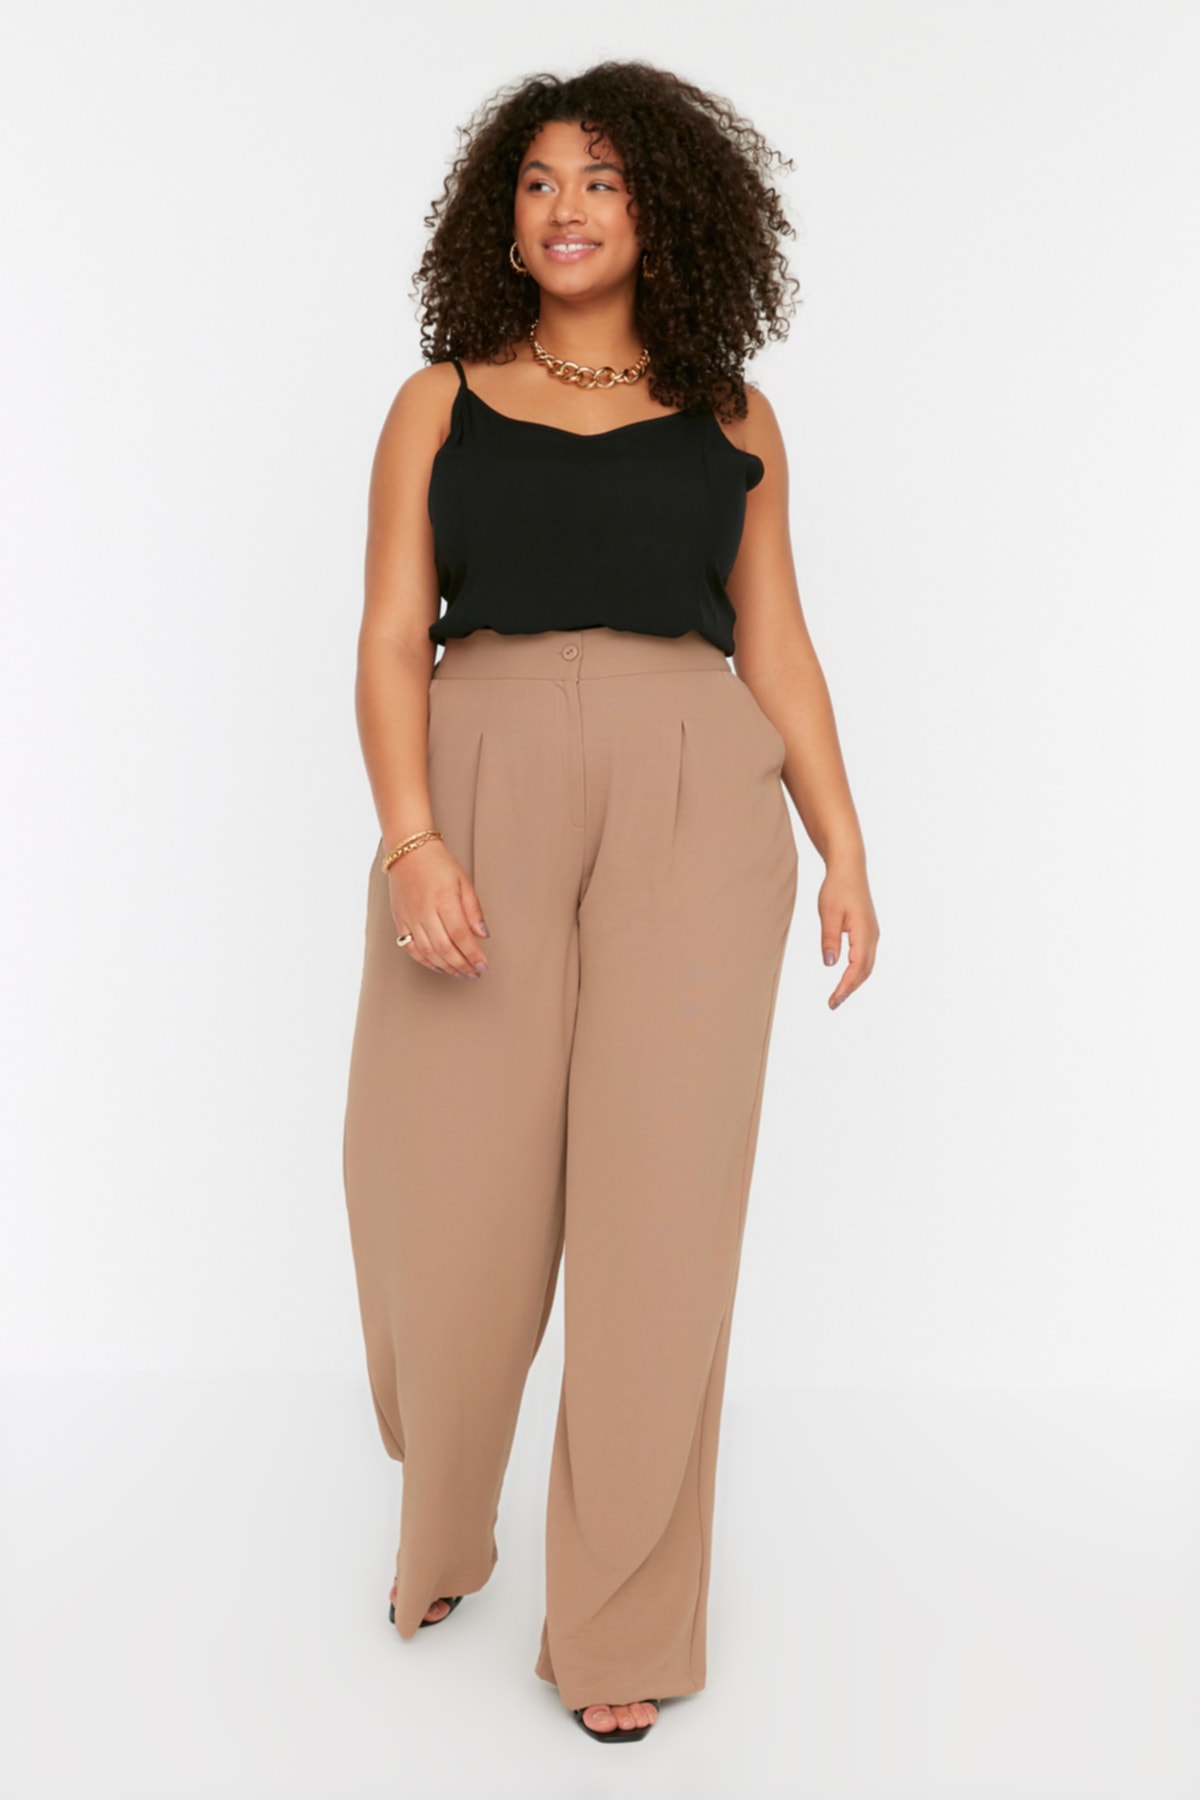 Bamans Plus Size Dress Pants for Women Stretch Elastic Waist Work Pants  Office Casual Straight Leg Pants(Regular, Black 16W) at Amazon Women's  Clothing store